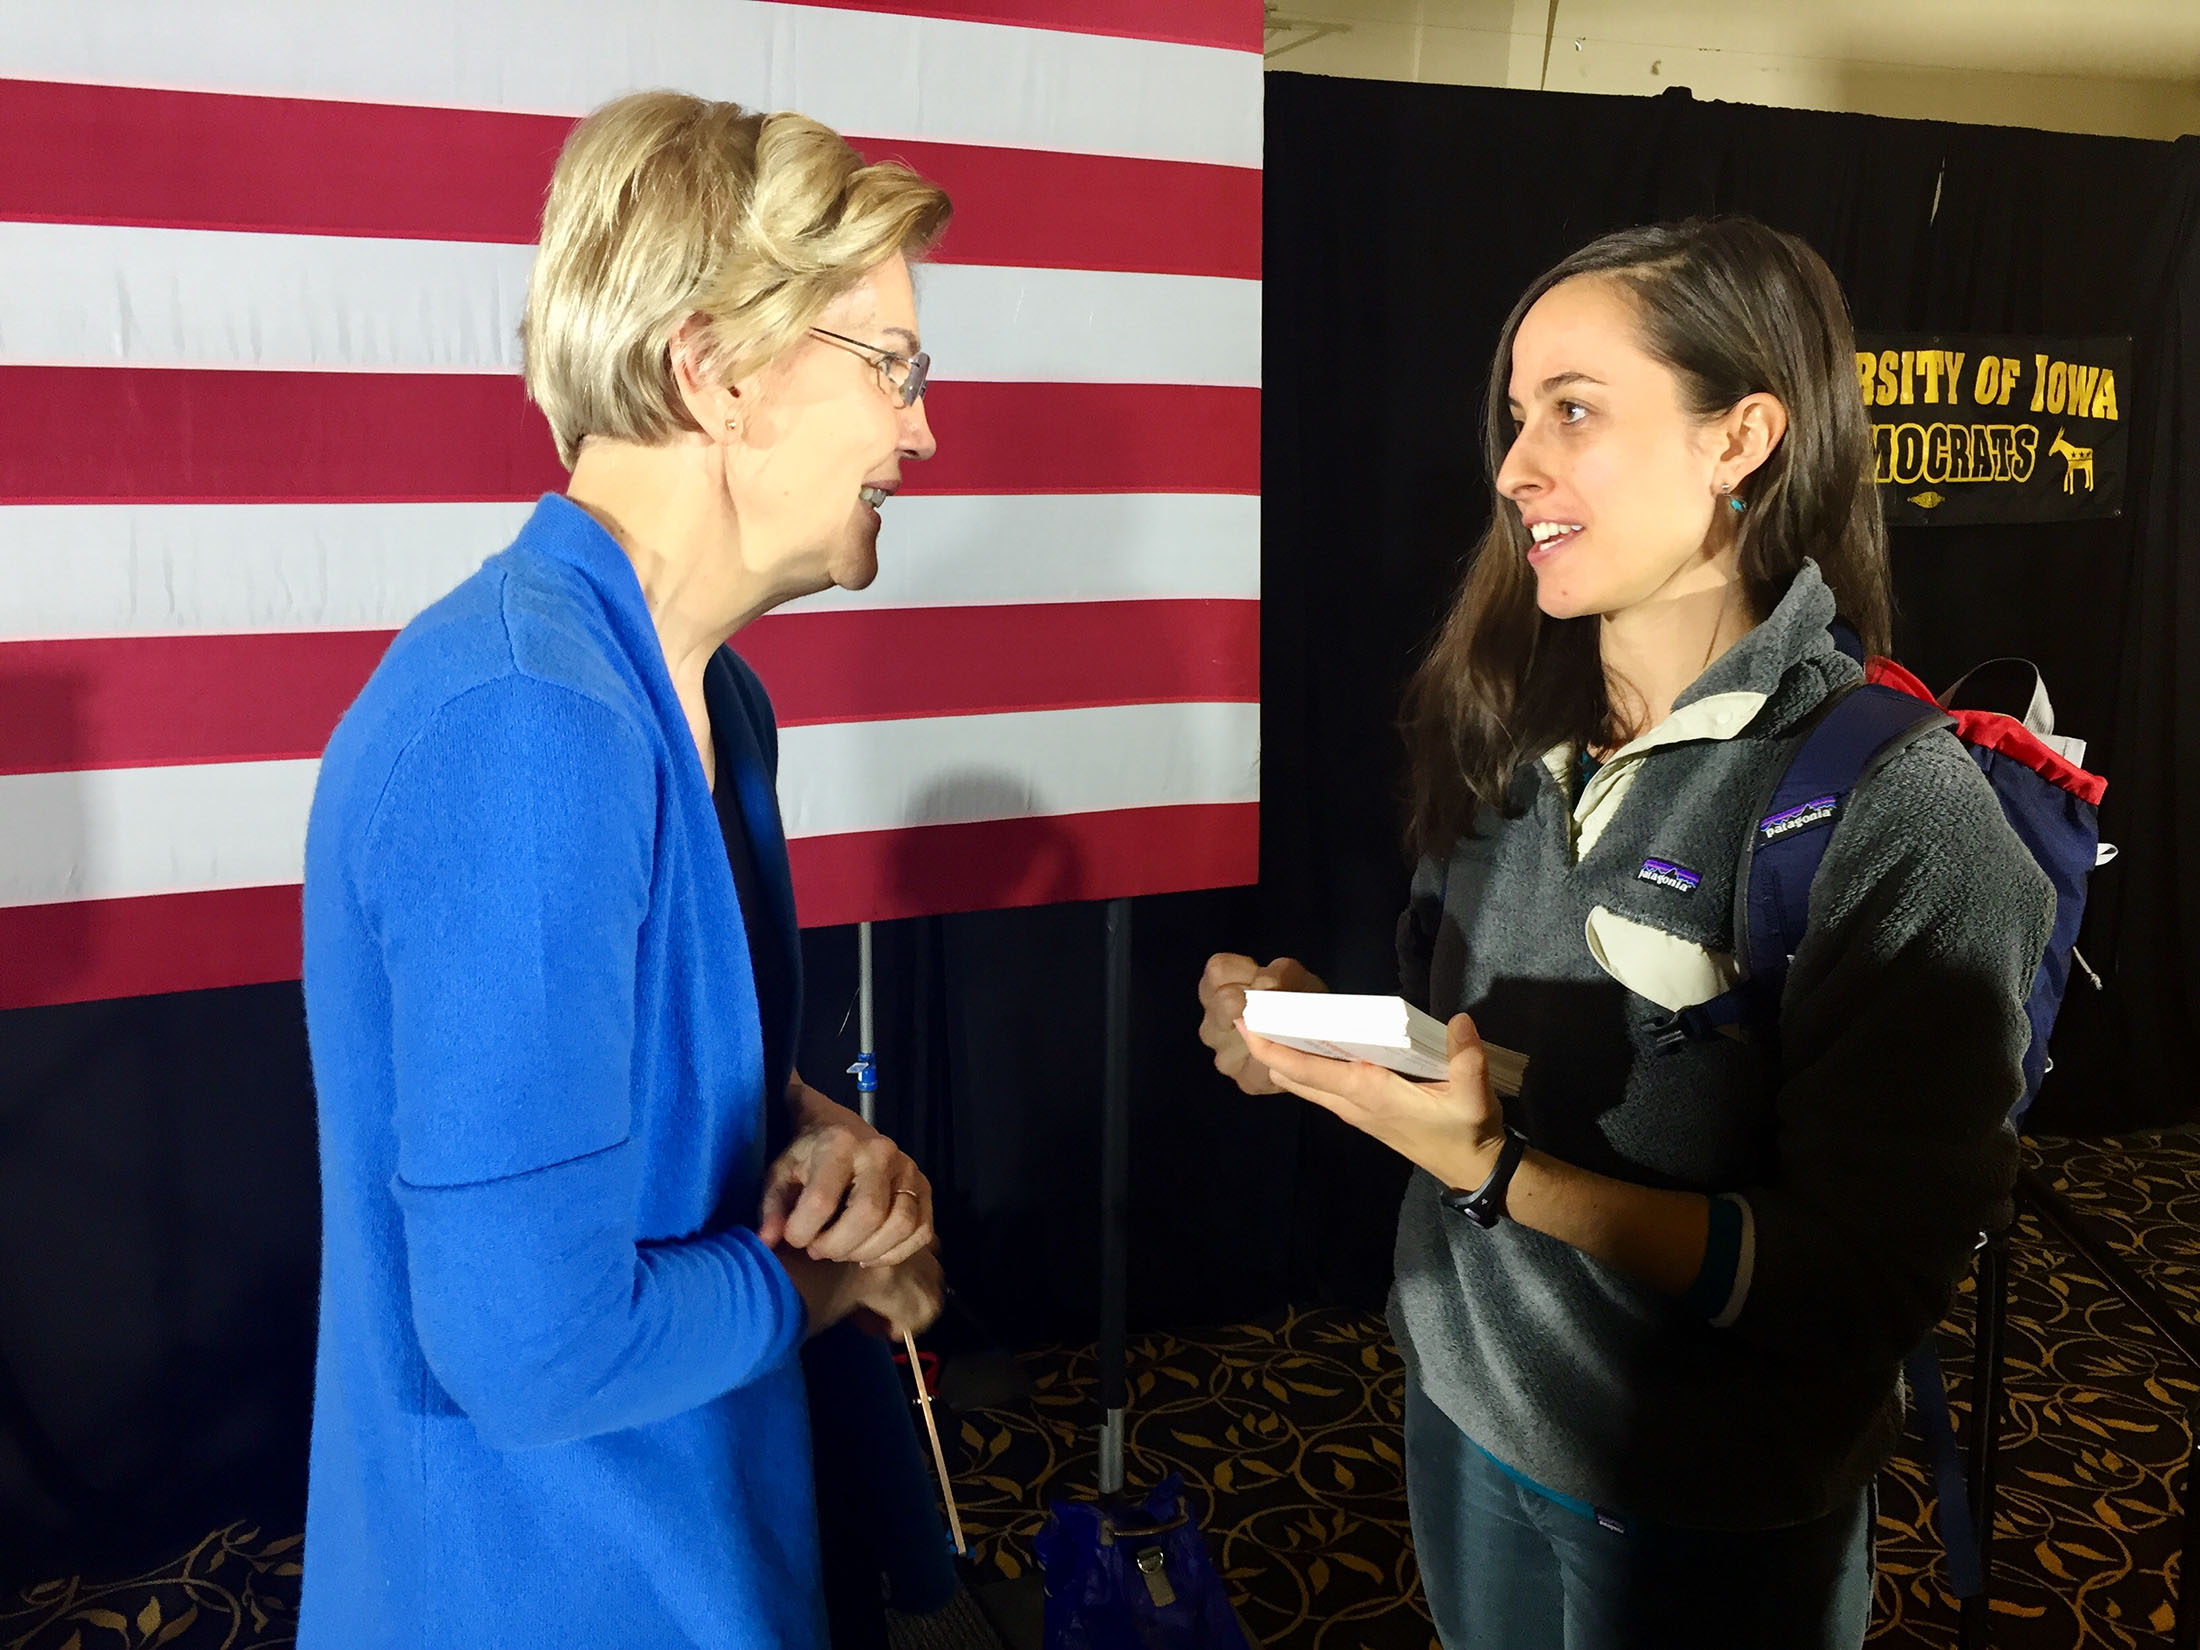 Mighty Earth activist Anya Fetcher presses Senator Elizabeth Warren on biofuel policy during an event in Iowa.